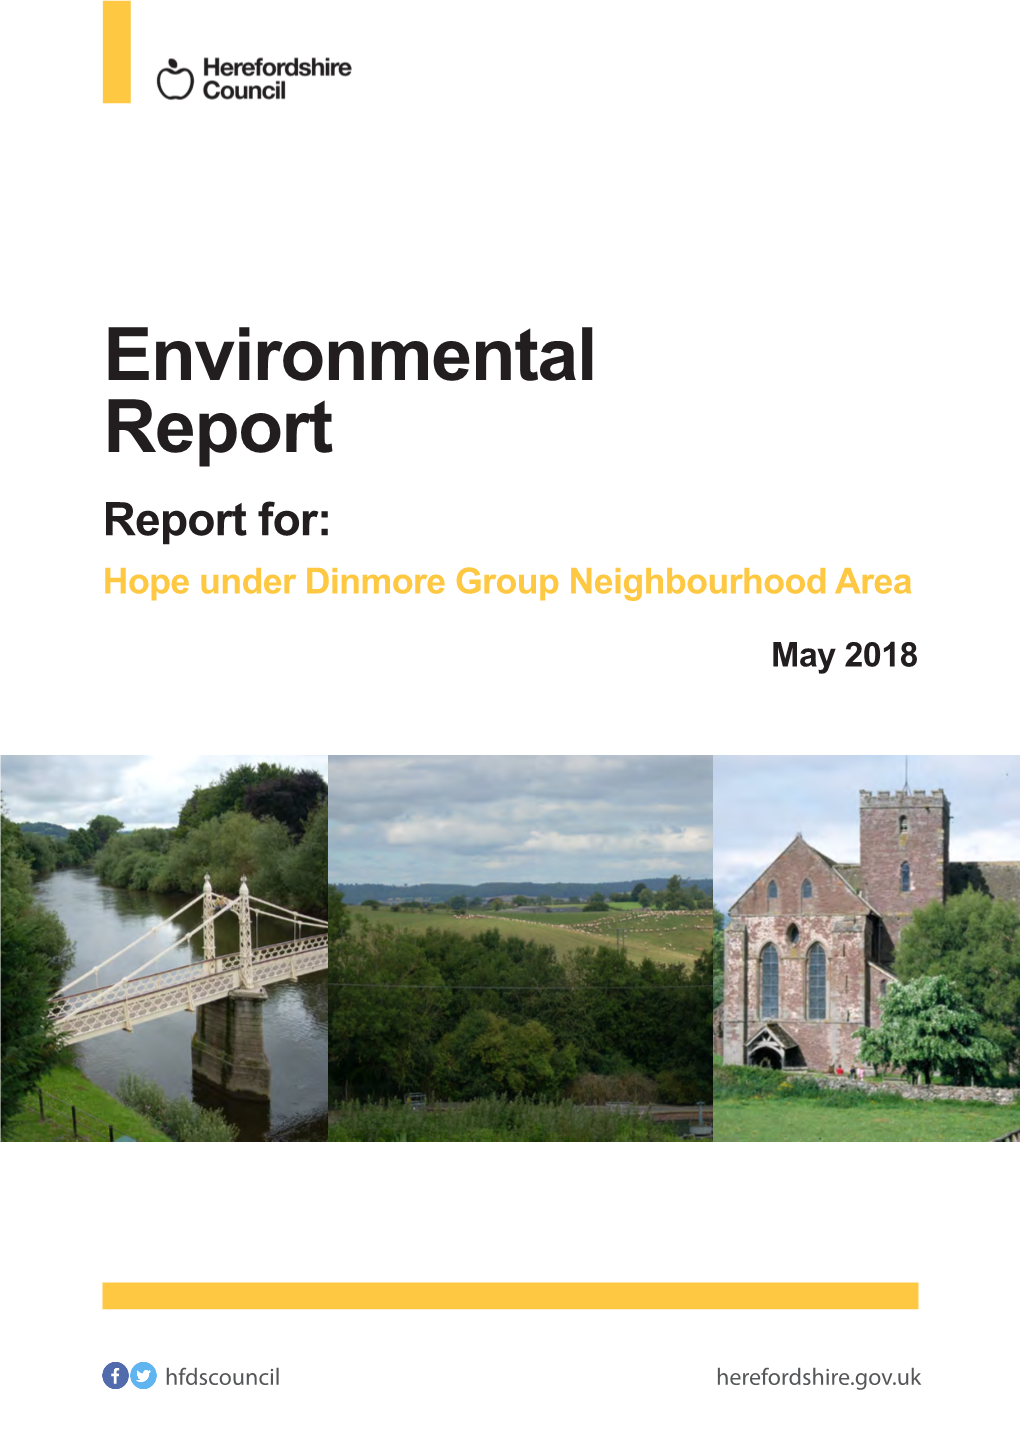 Hope Under Dinmore Environmental Report May 2018